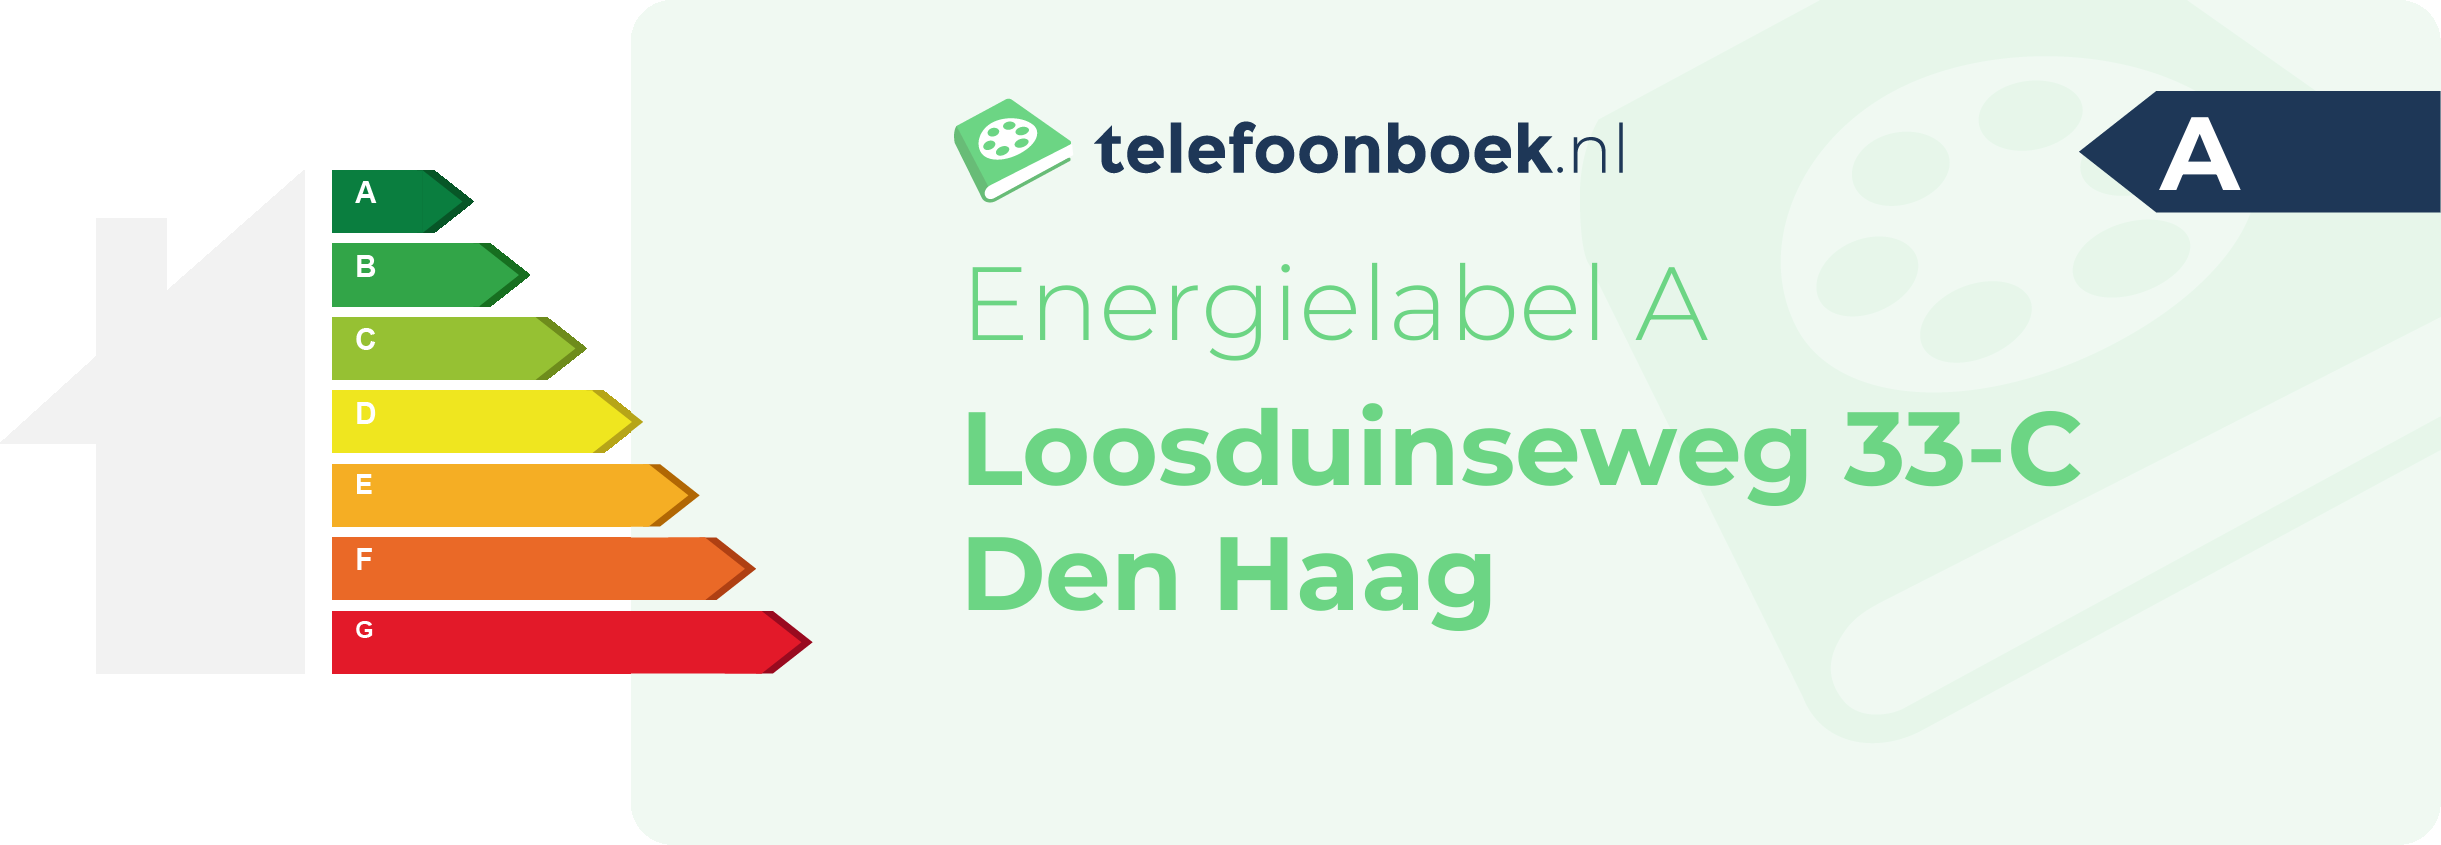 Energielabel Loosduinseweg 33-C Den Haag